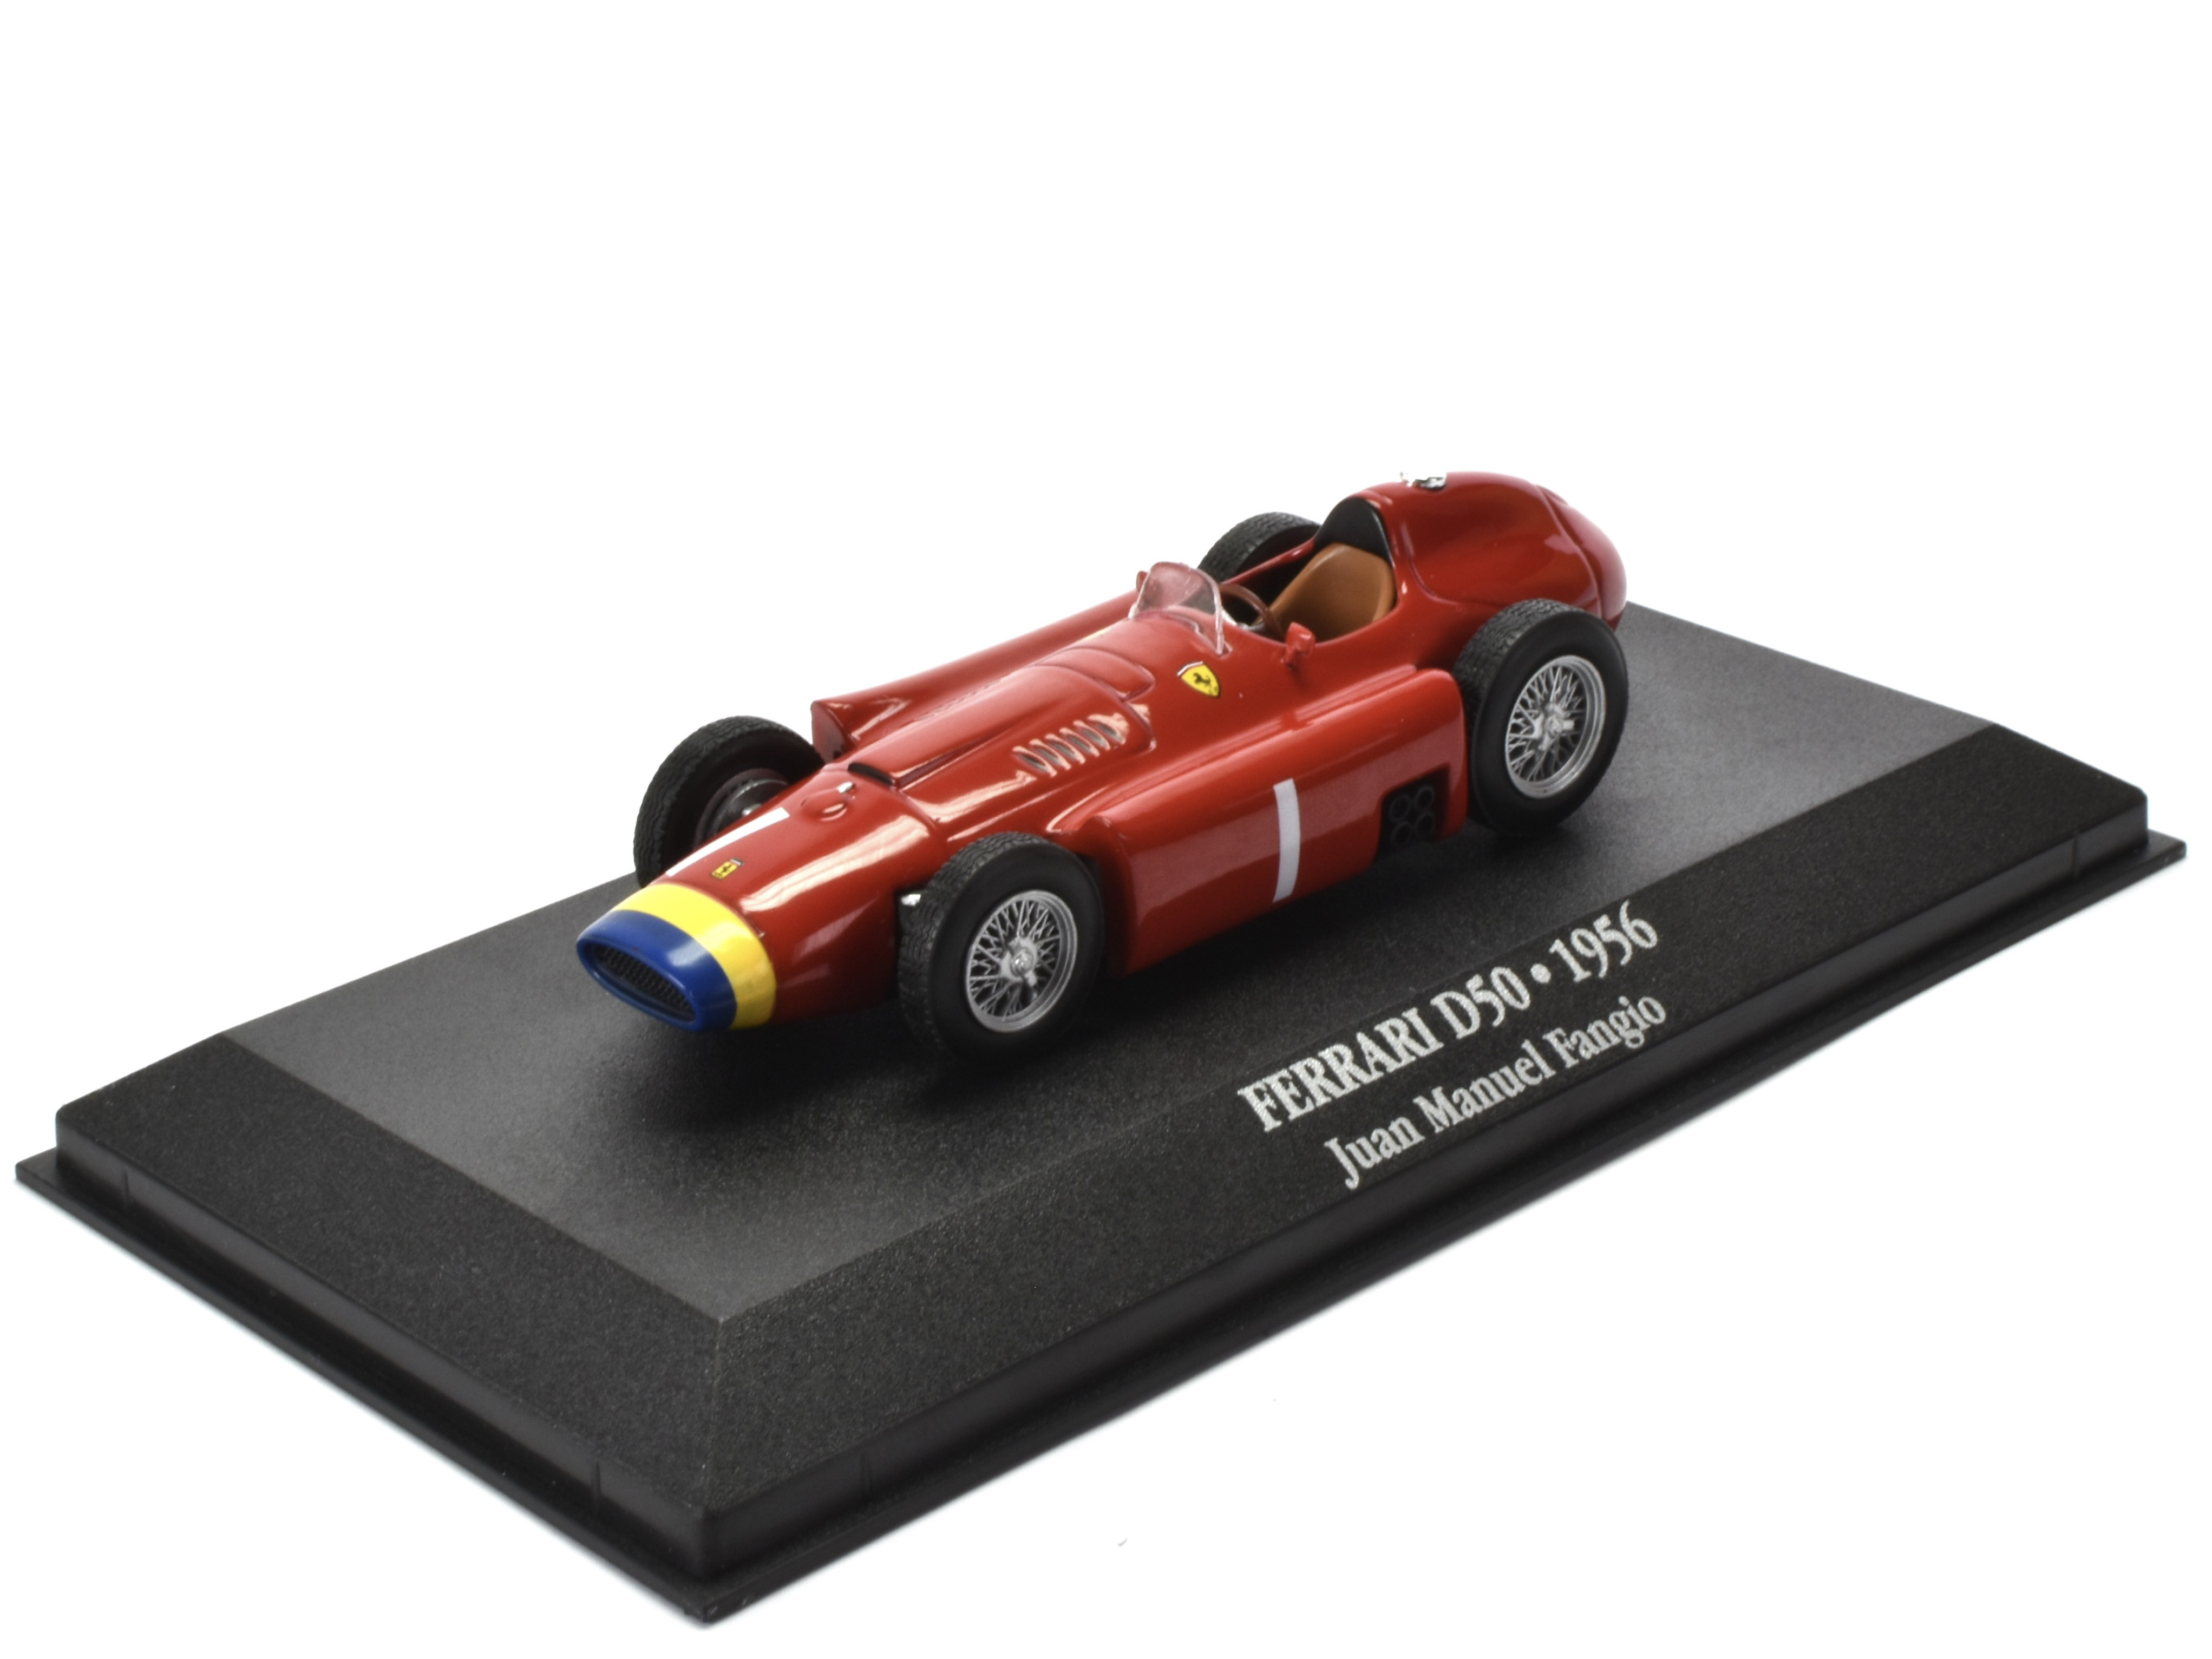 ABFEA.Auto Ferrari Formula 1 scala 1:43 by Atlas